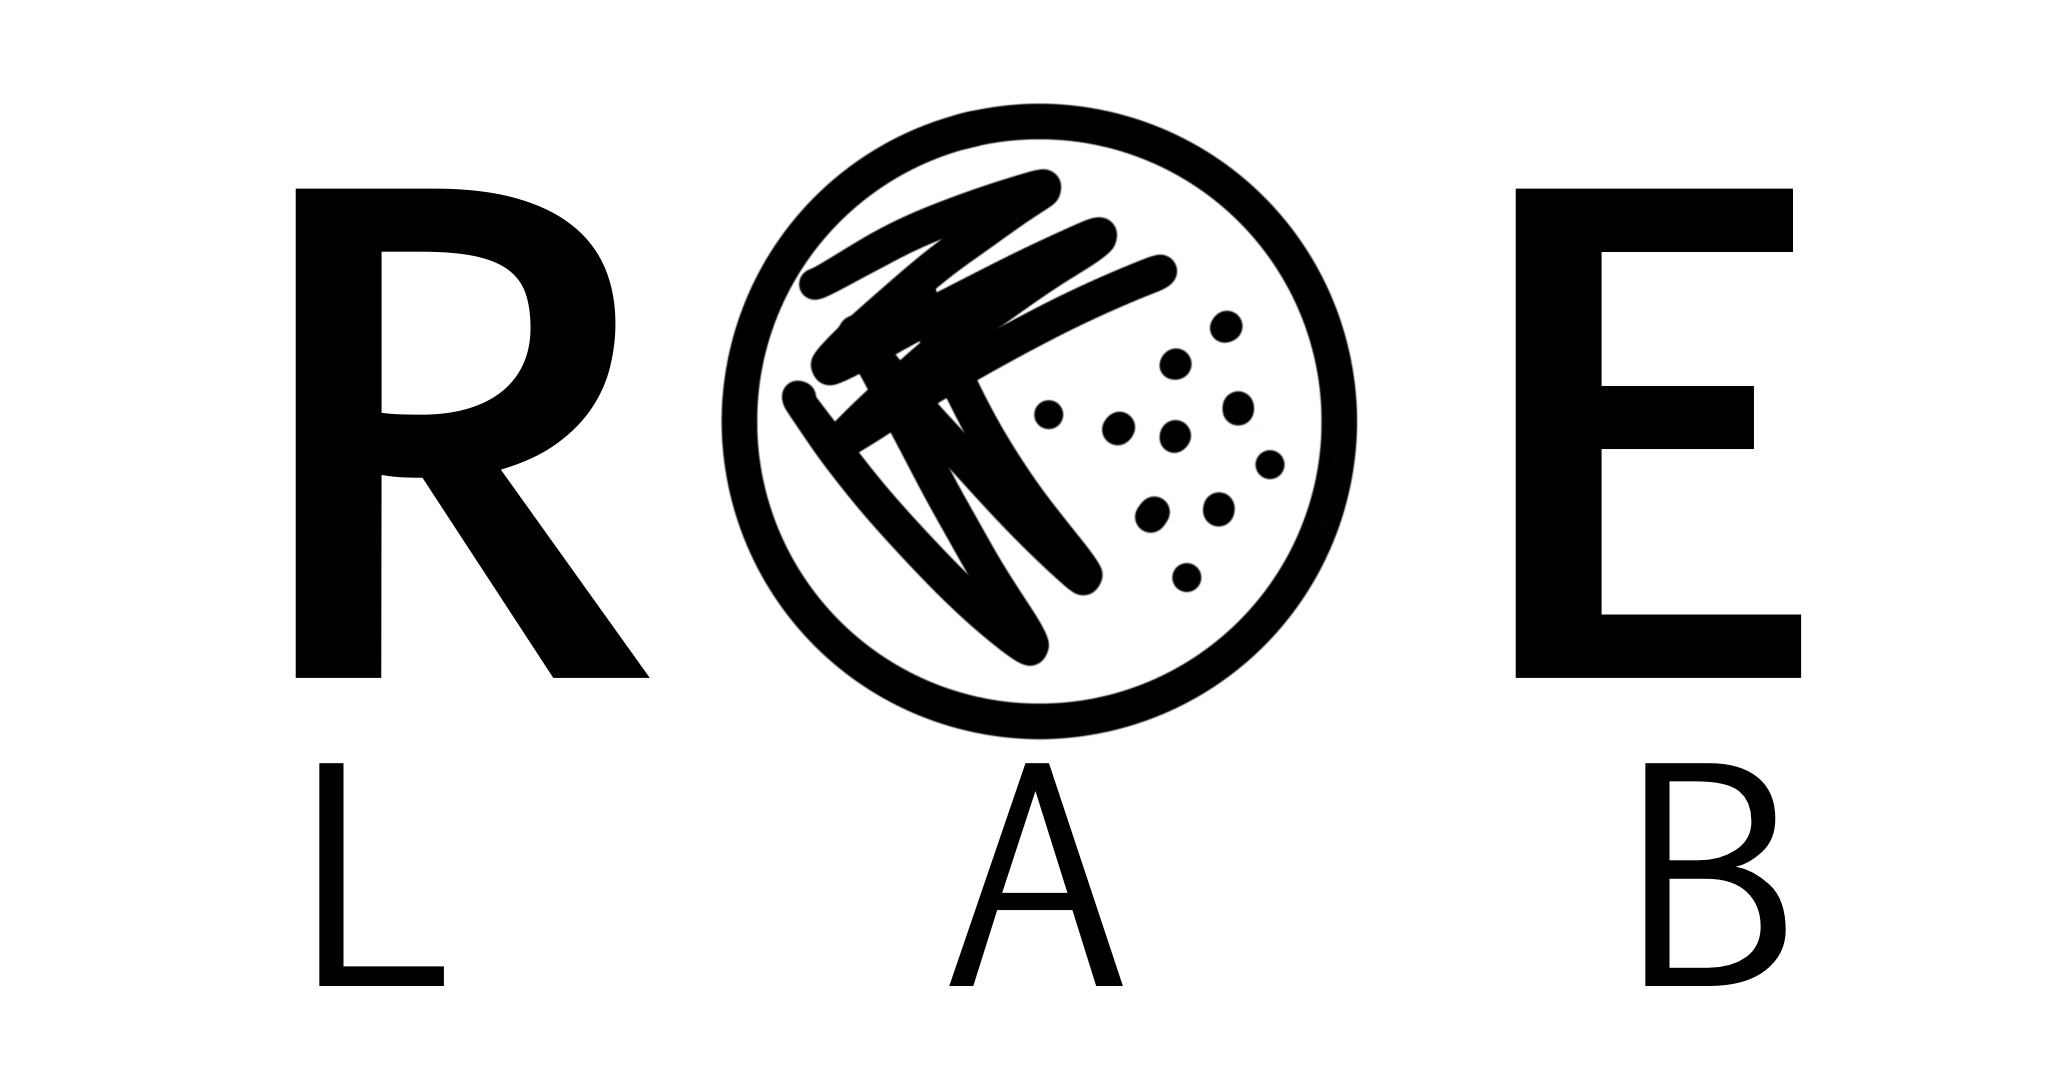 Roe lab logo